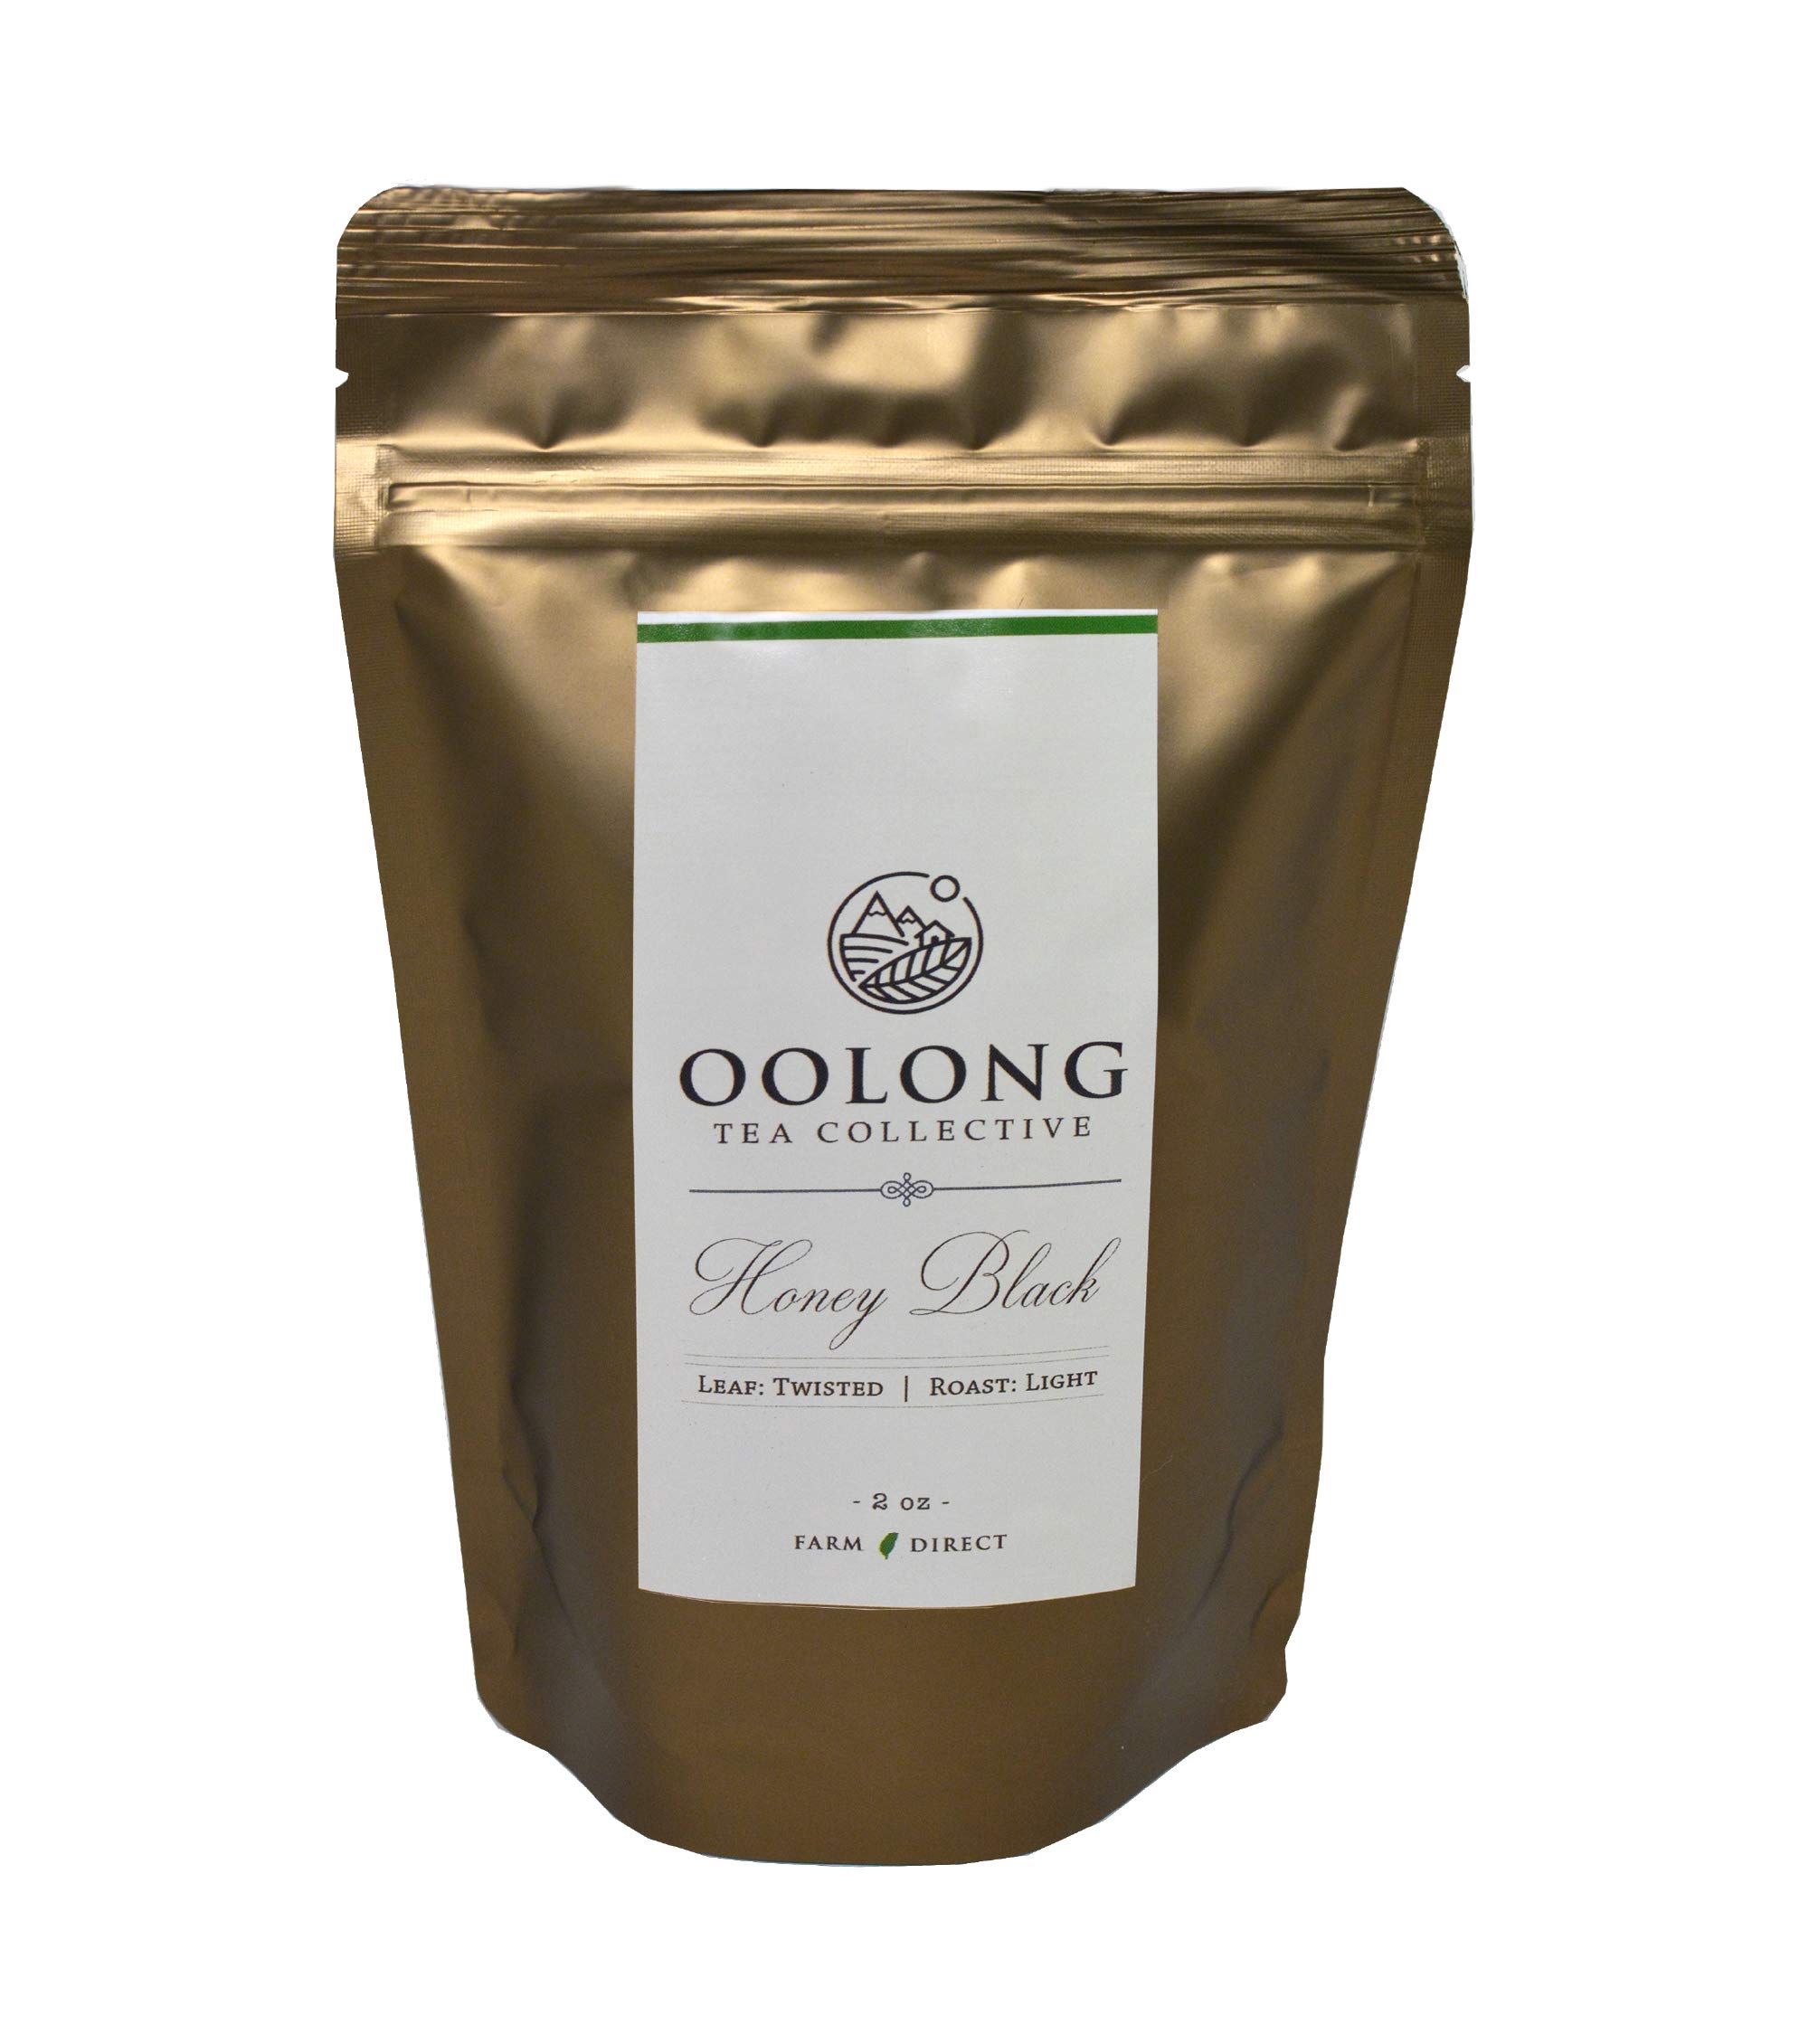 OOLONG TEA COLLECTIV Honey Black Tea - 2022 Fresh Harvest - No Sweetener - No Added Flavors - Loose Leaf Black Tea from Taiwan - Tea Gift, Hot, Iced,